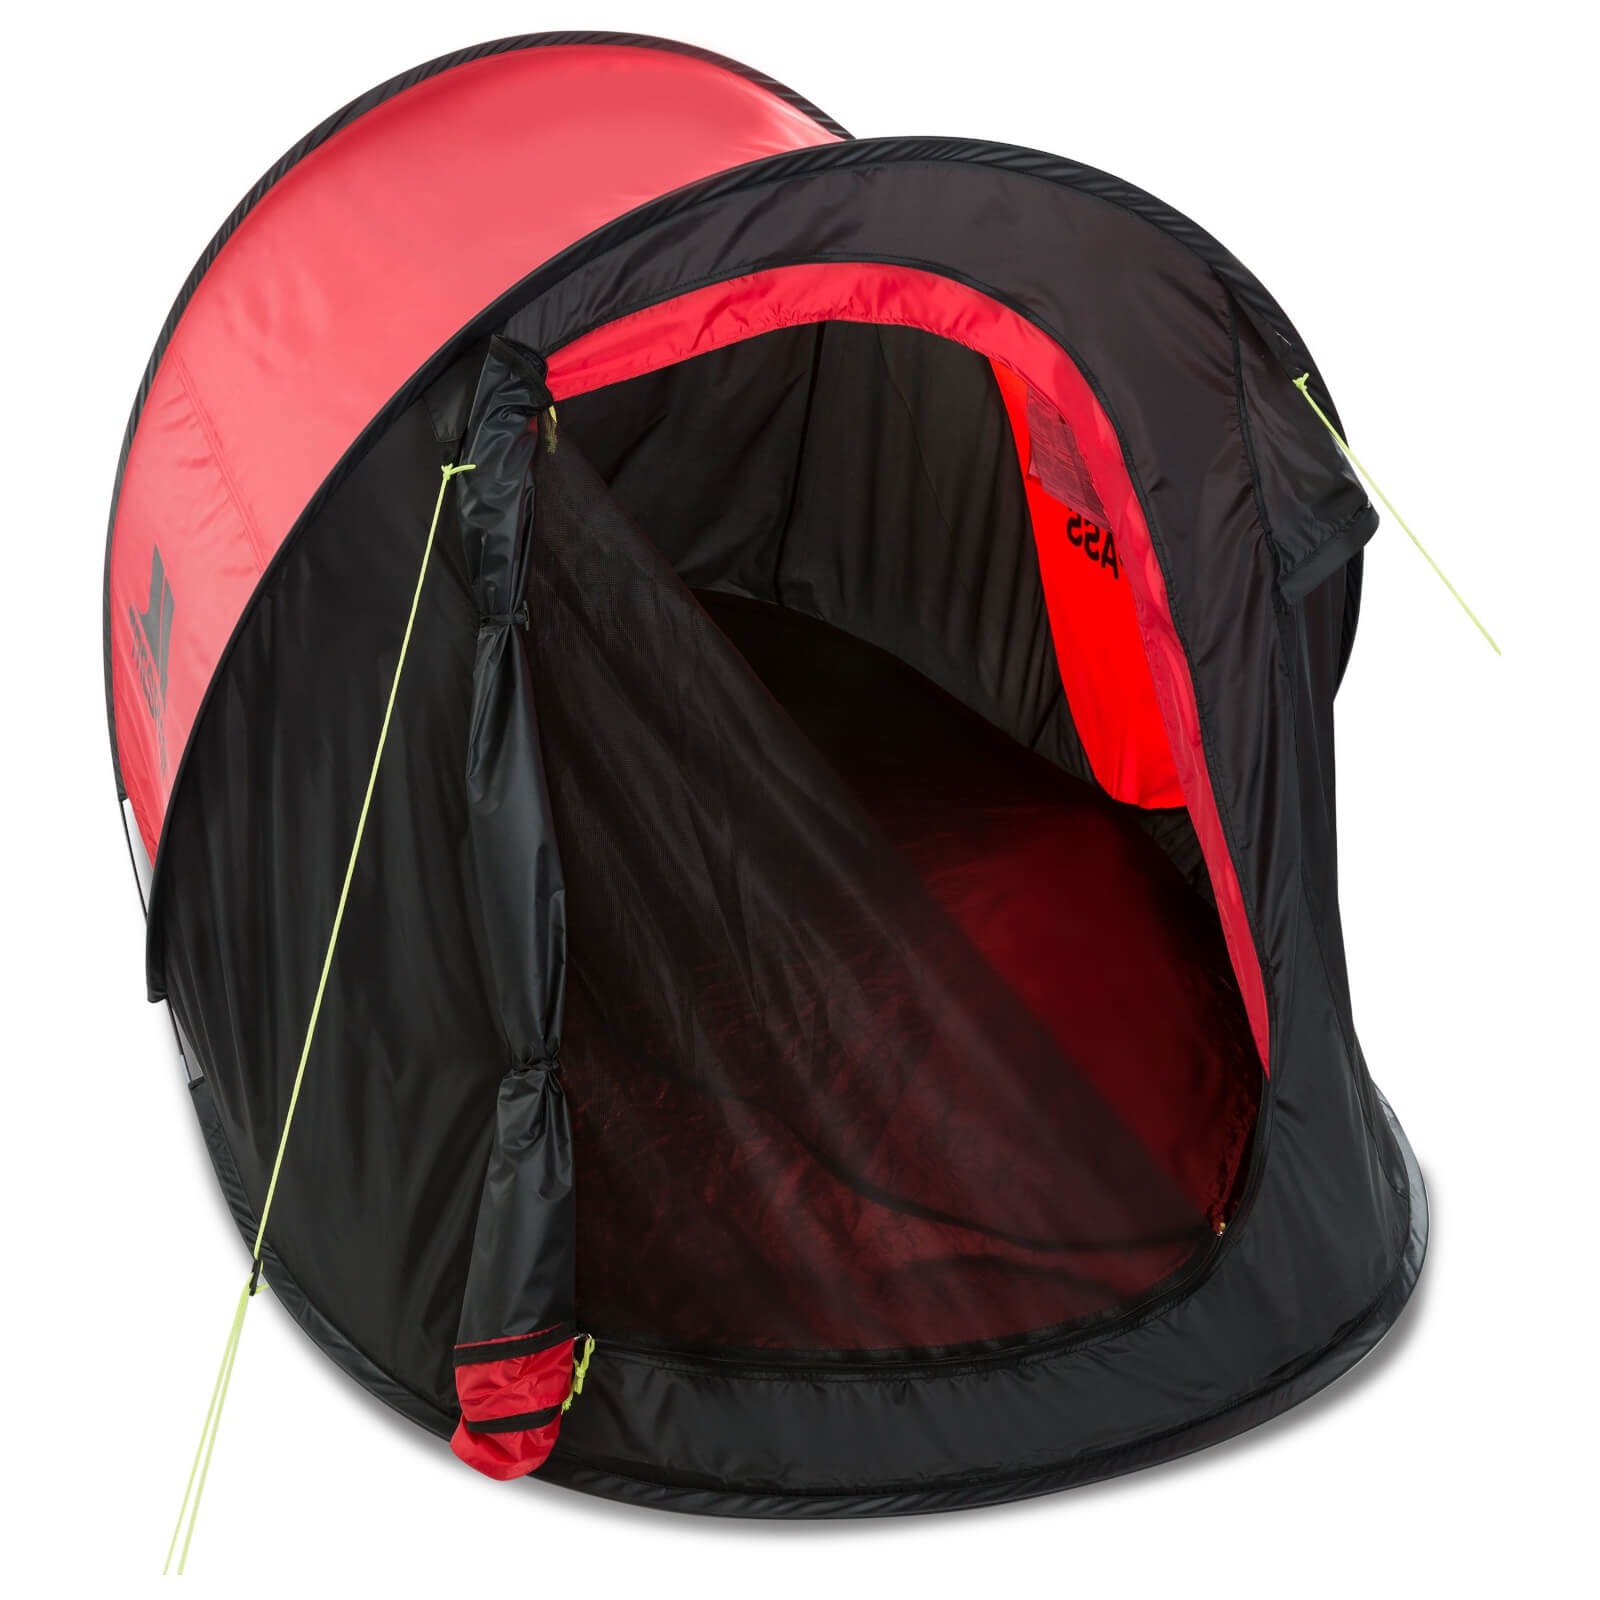 Trespass Swift Pop Up 2 Person Camping Tent Alternate 1